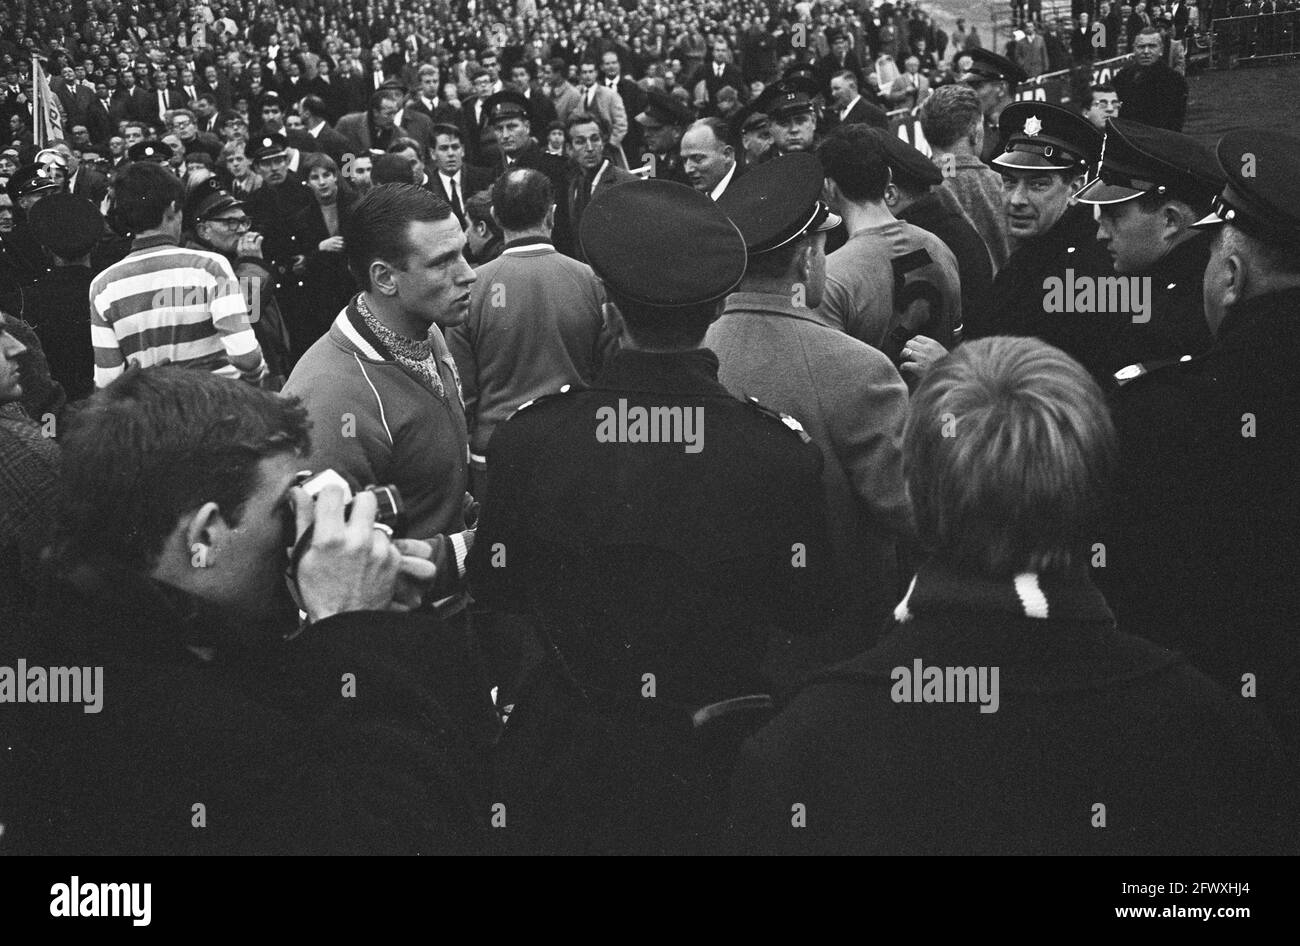 Protesting spectators enter the field, November 6, 1966, internationals, policemen, sports, soccer, The Netherlands, 20th century press agency photo, Stock Photo